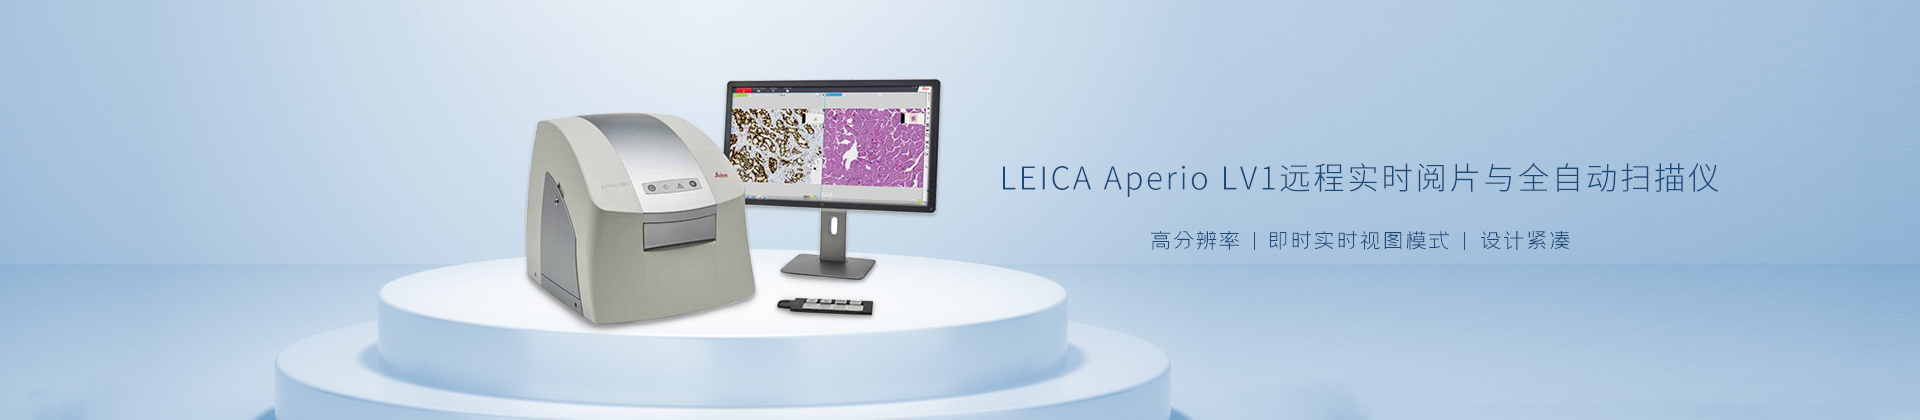 LEICA Aperio LV1远程实时阅片与全自动扫描仪